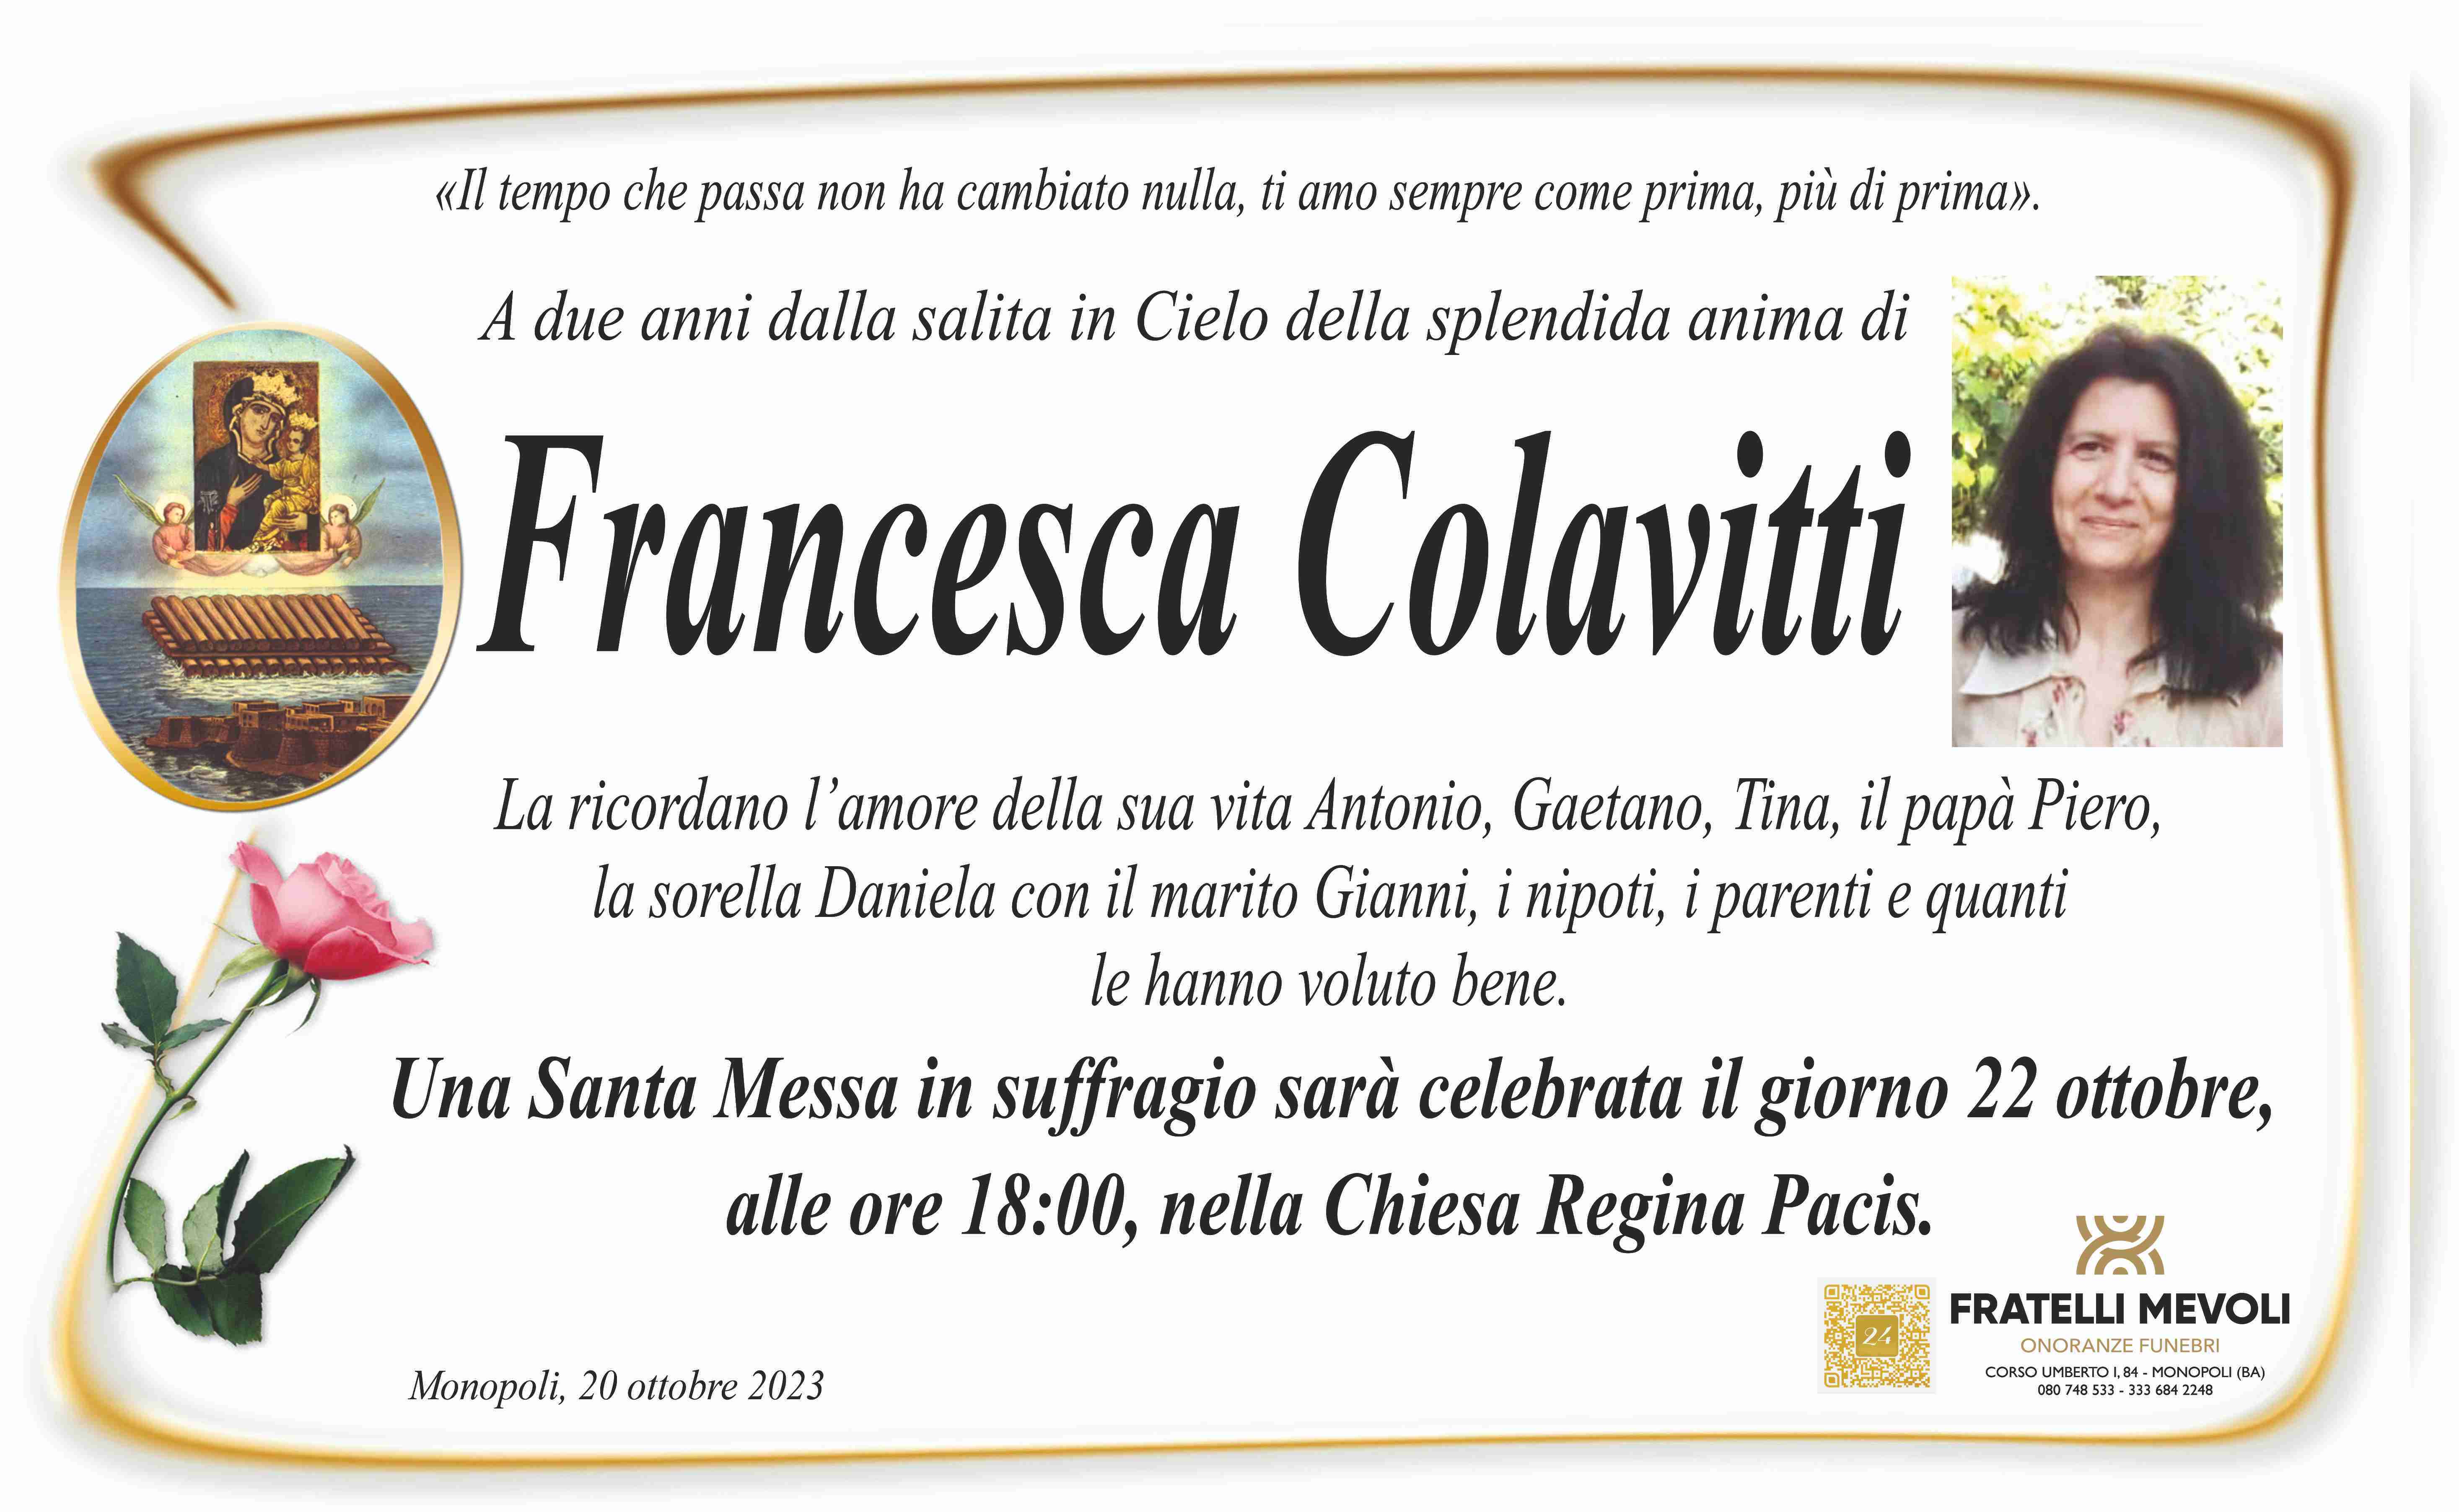 Francesca Colavitti